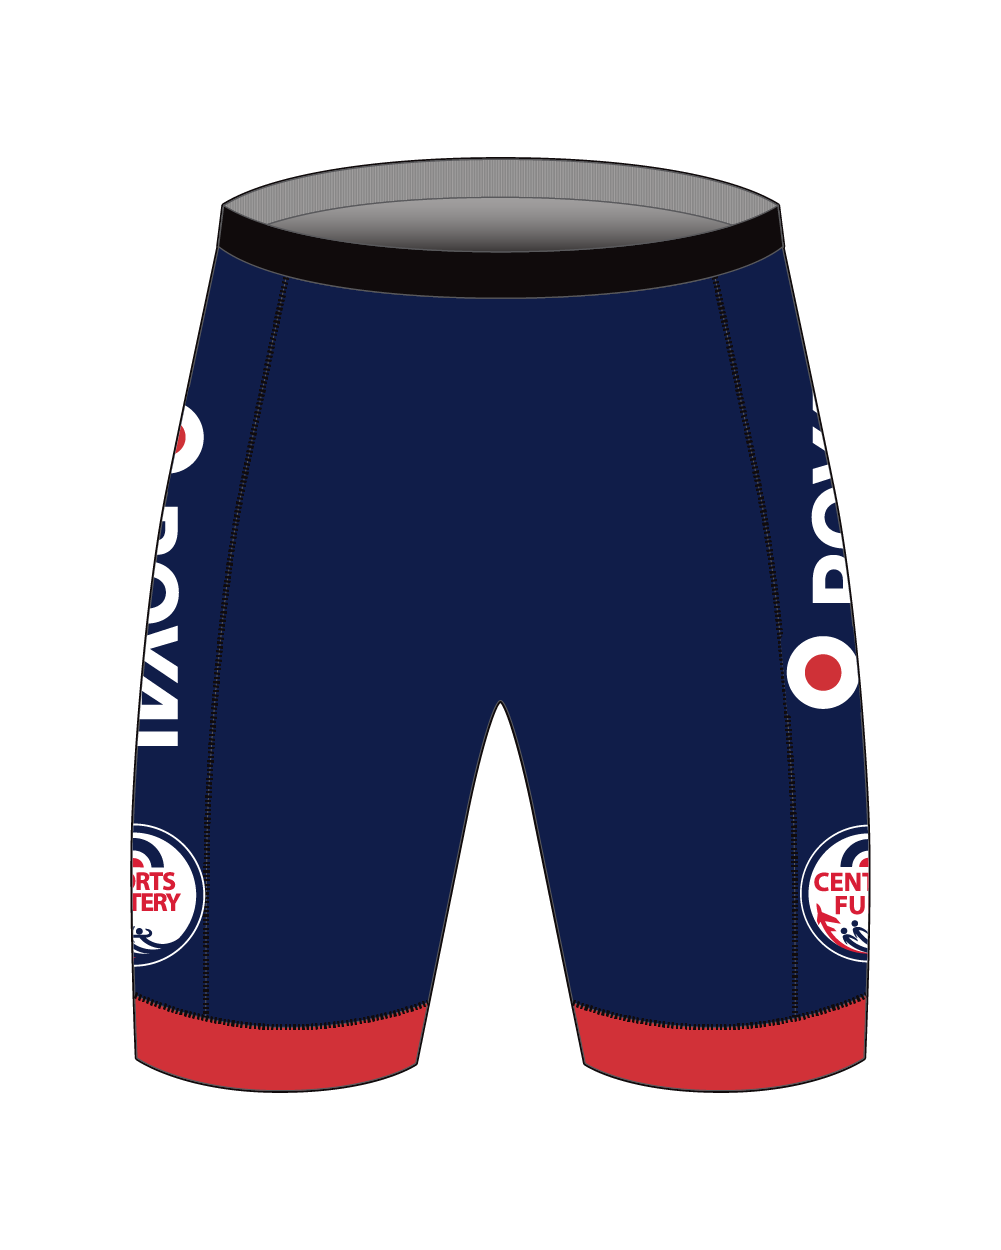 RAF - Elite Tri Shorts